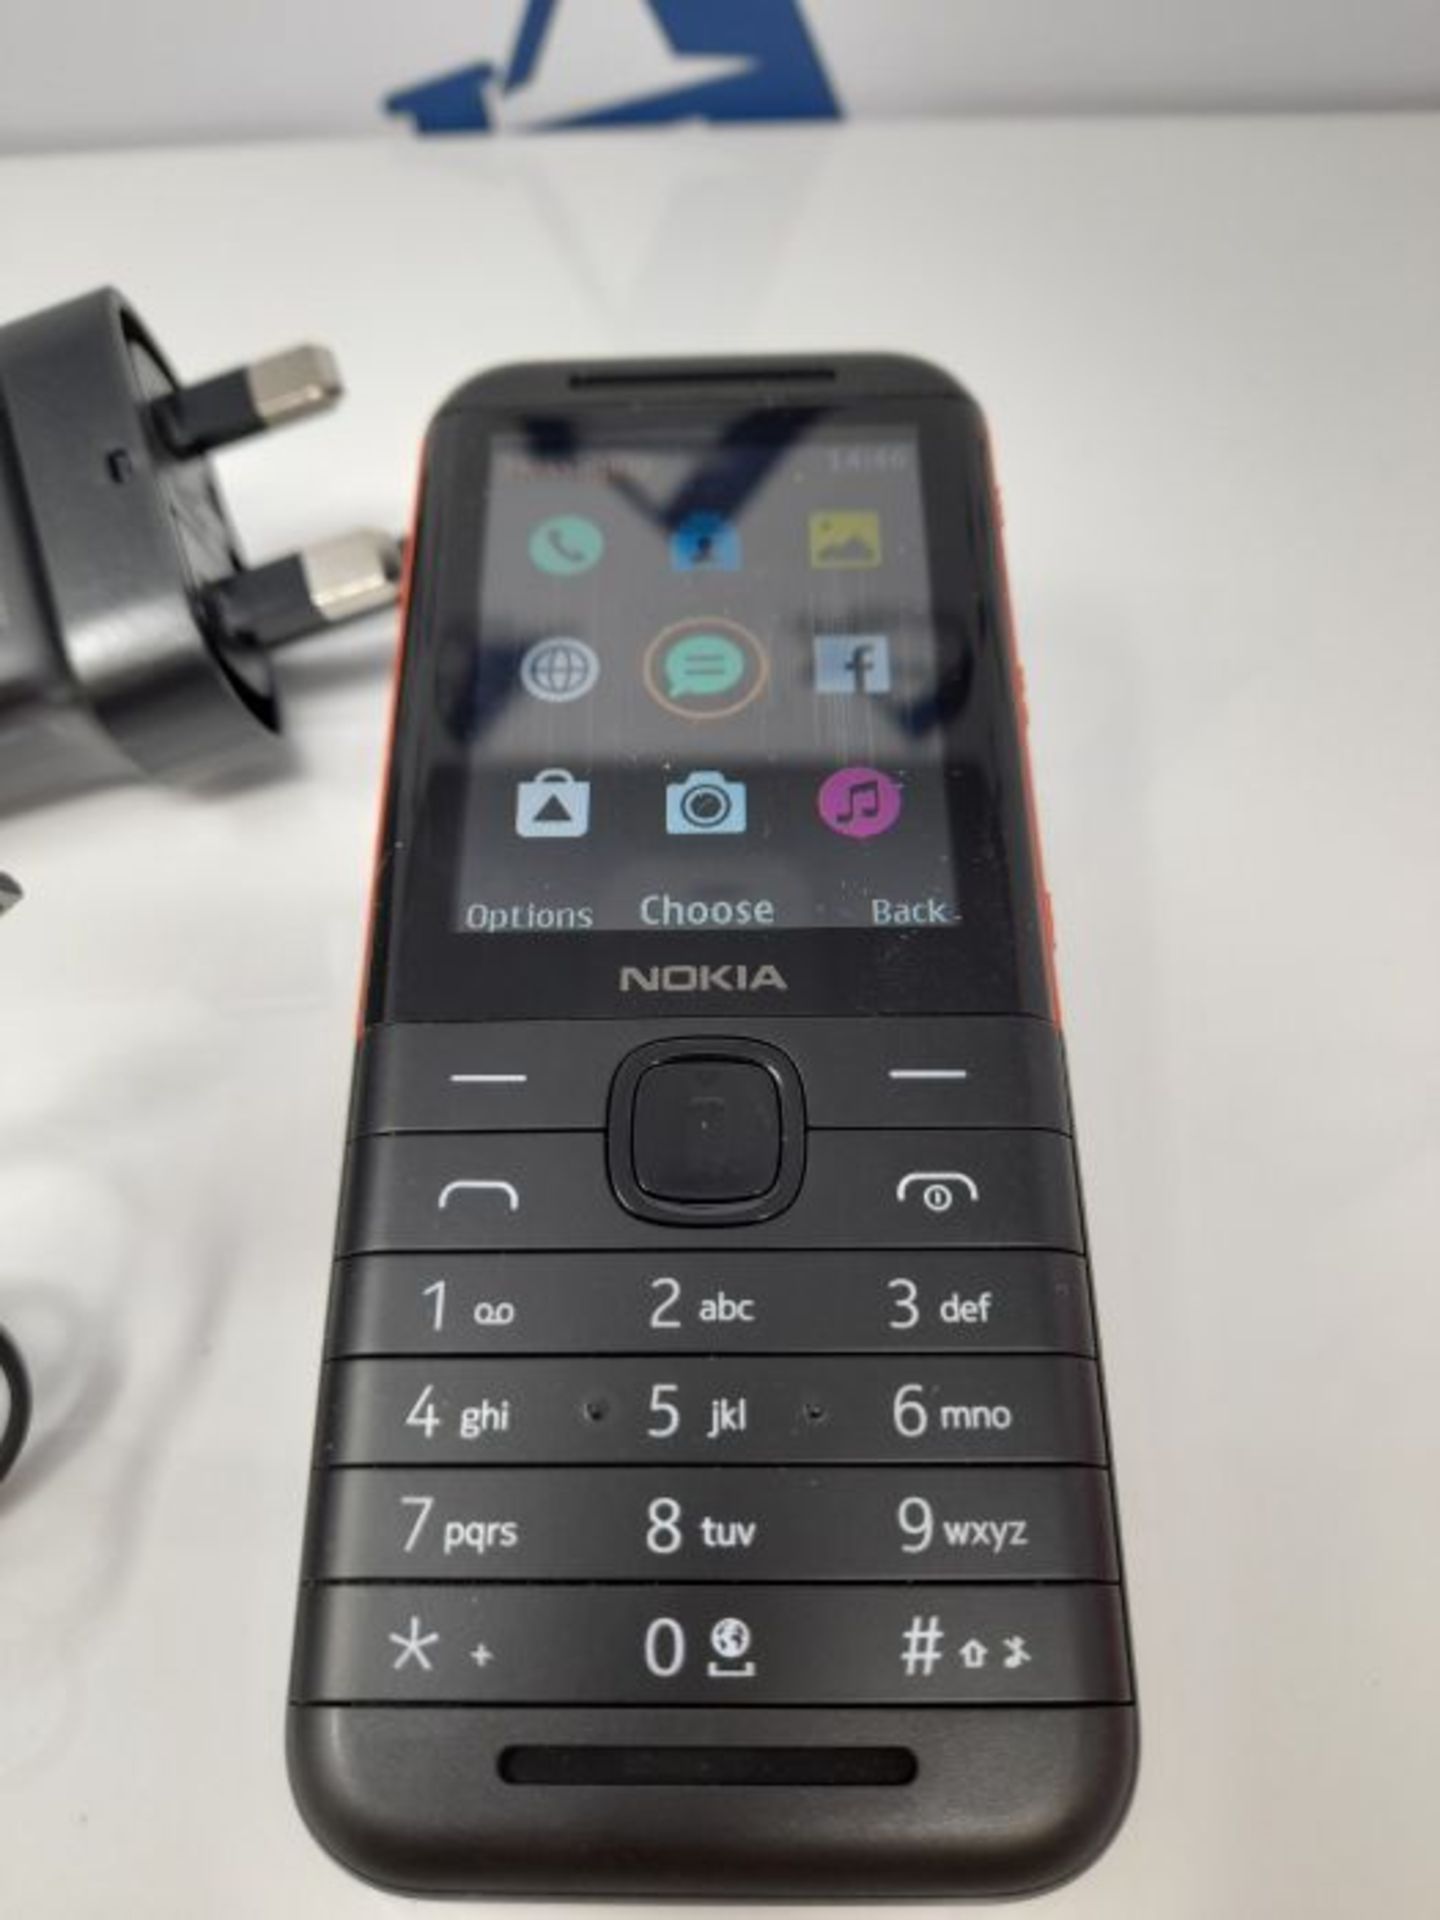 Nokia 5310 2.4 Inch 8 MB UK SIM-Free 2G Feature Phone (Dual Sim) - Black/Red - Image 2 of 3